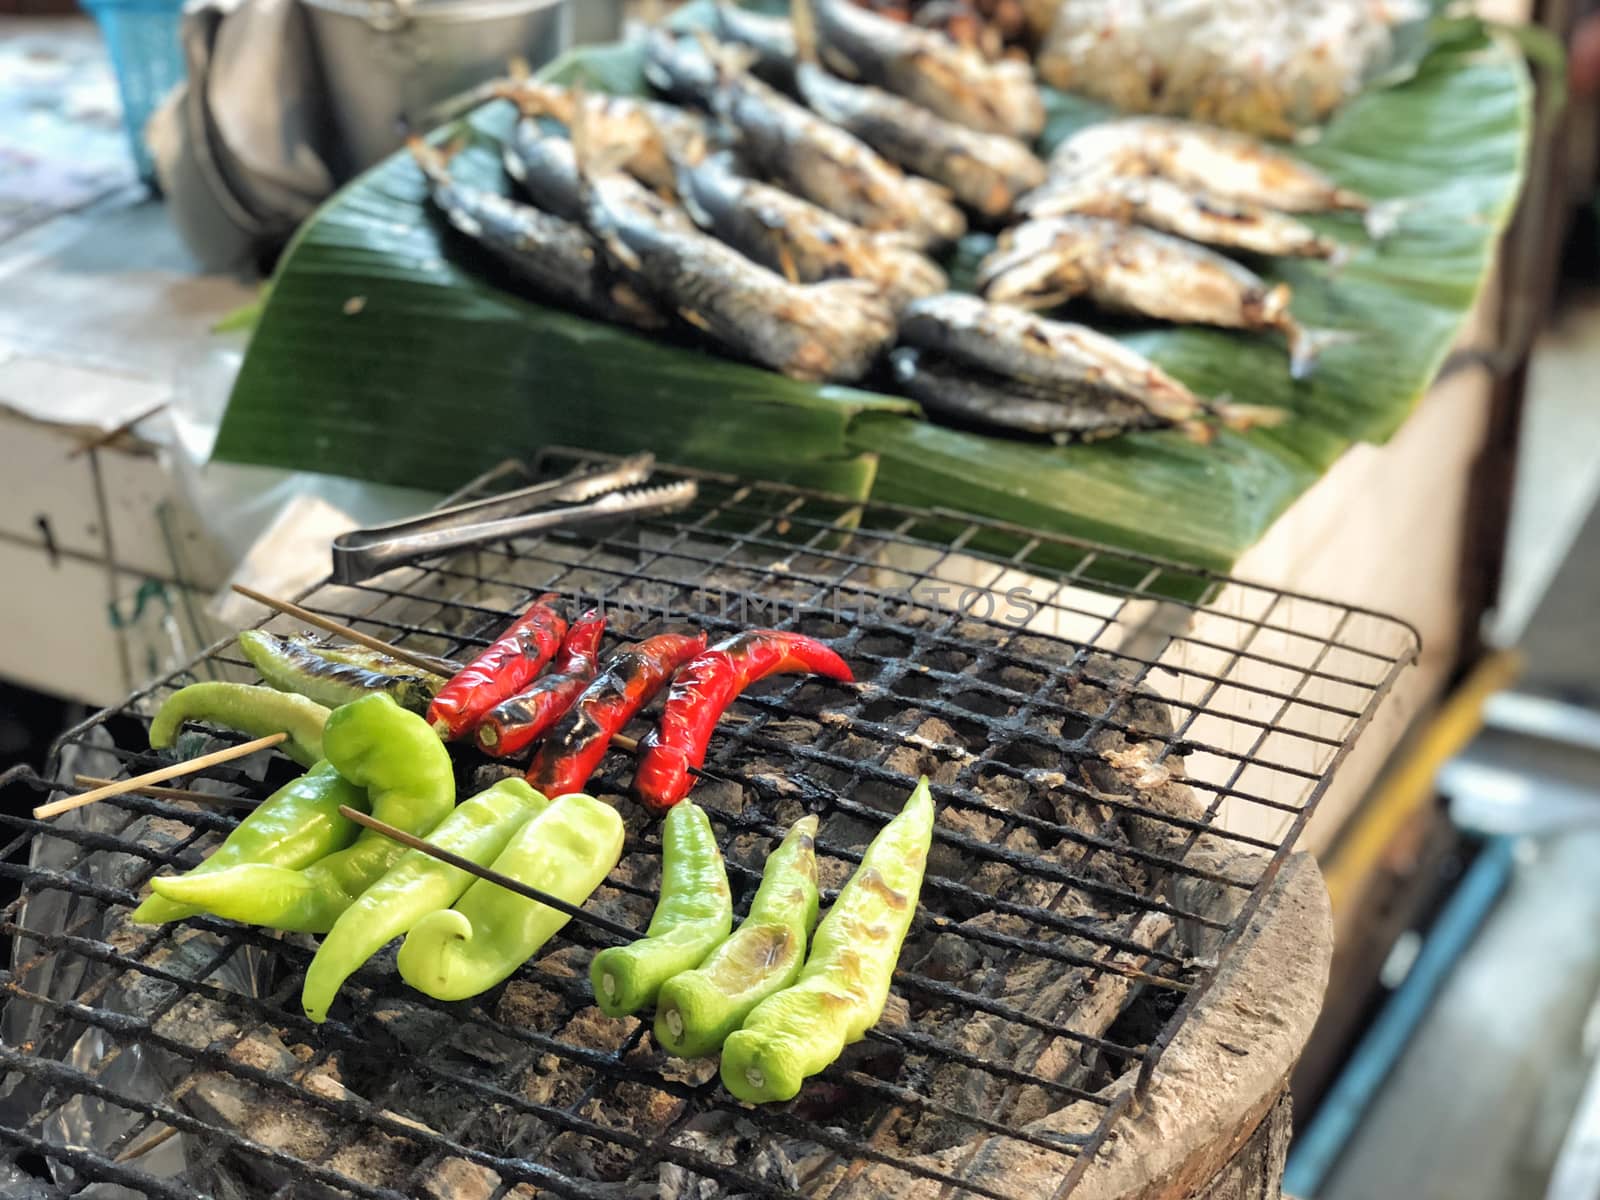 Bell pepper grill on stove in street market by Surasak